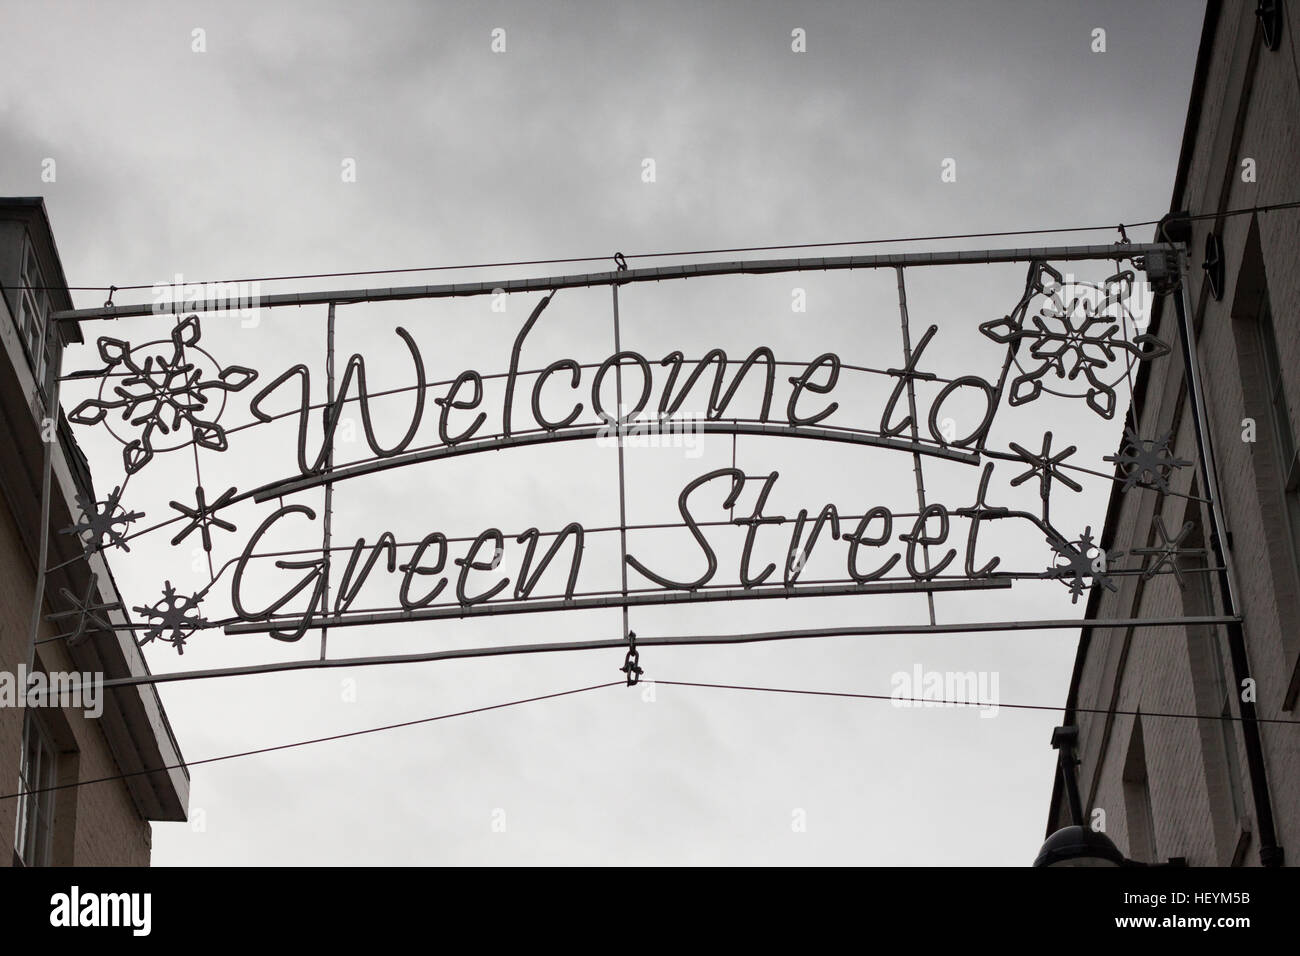 Welcome to green street, cambridge, 24/12/16 Stock Photo